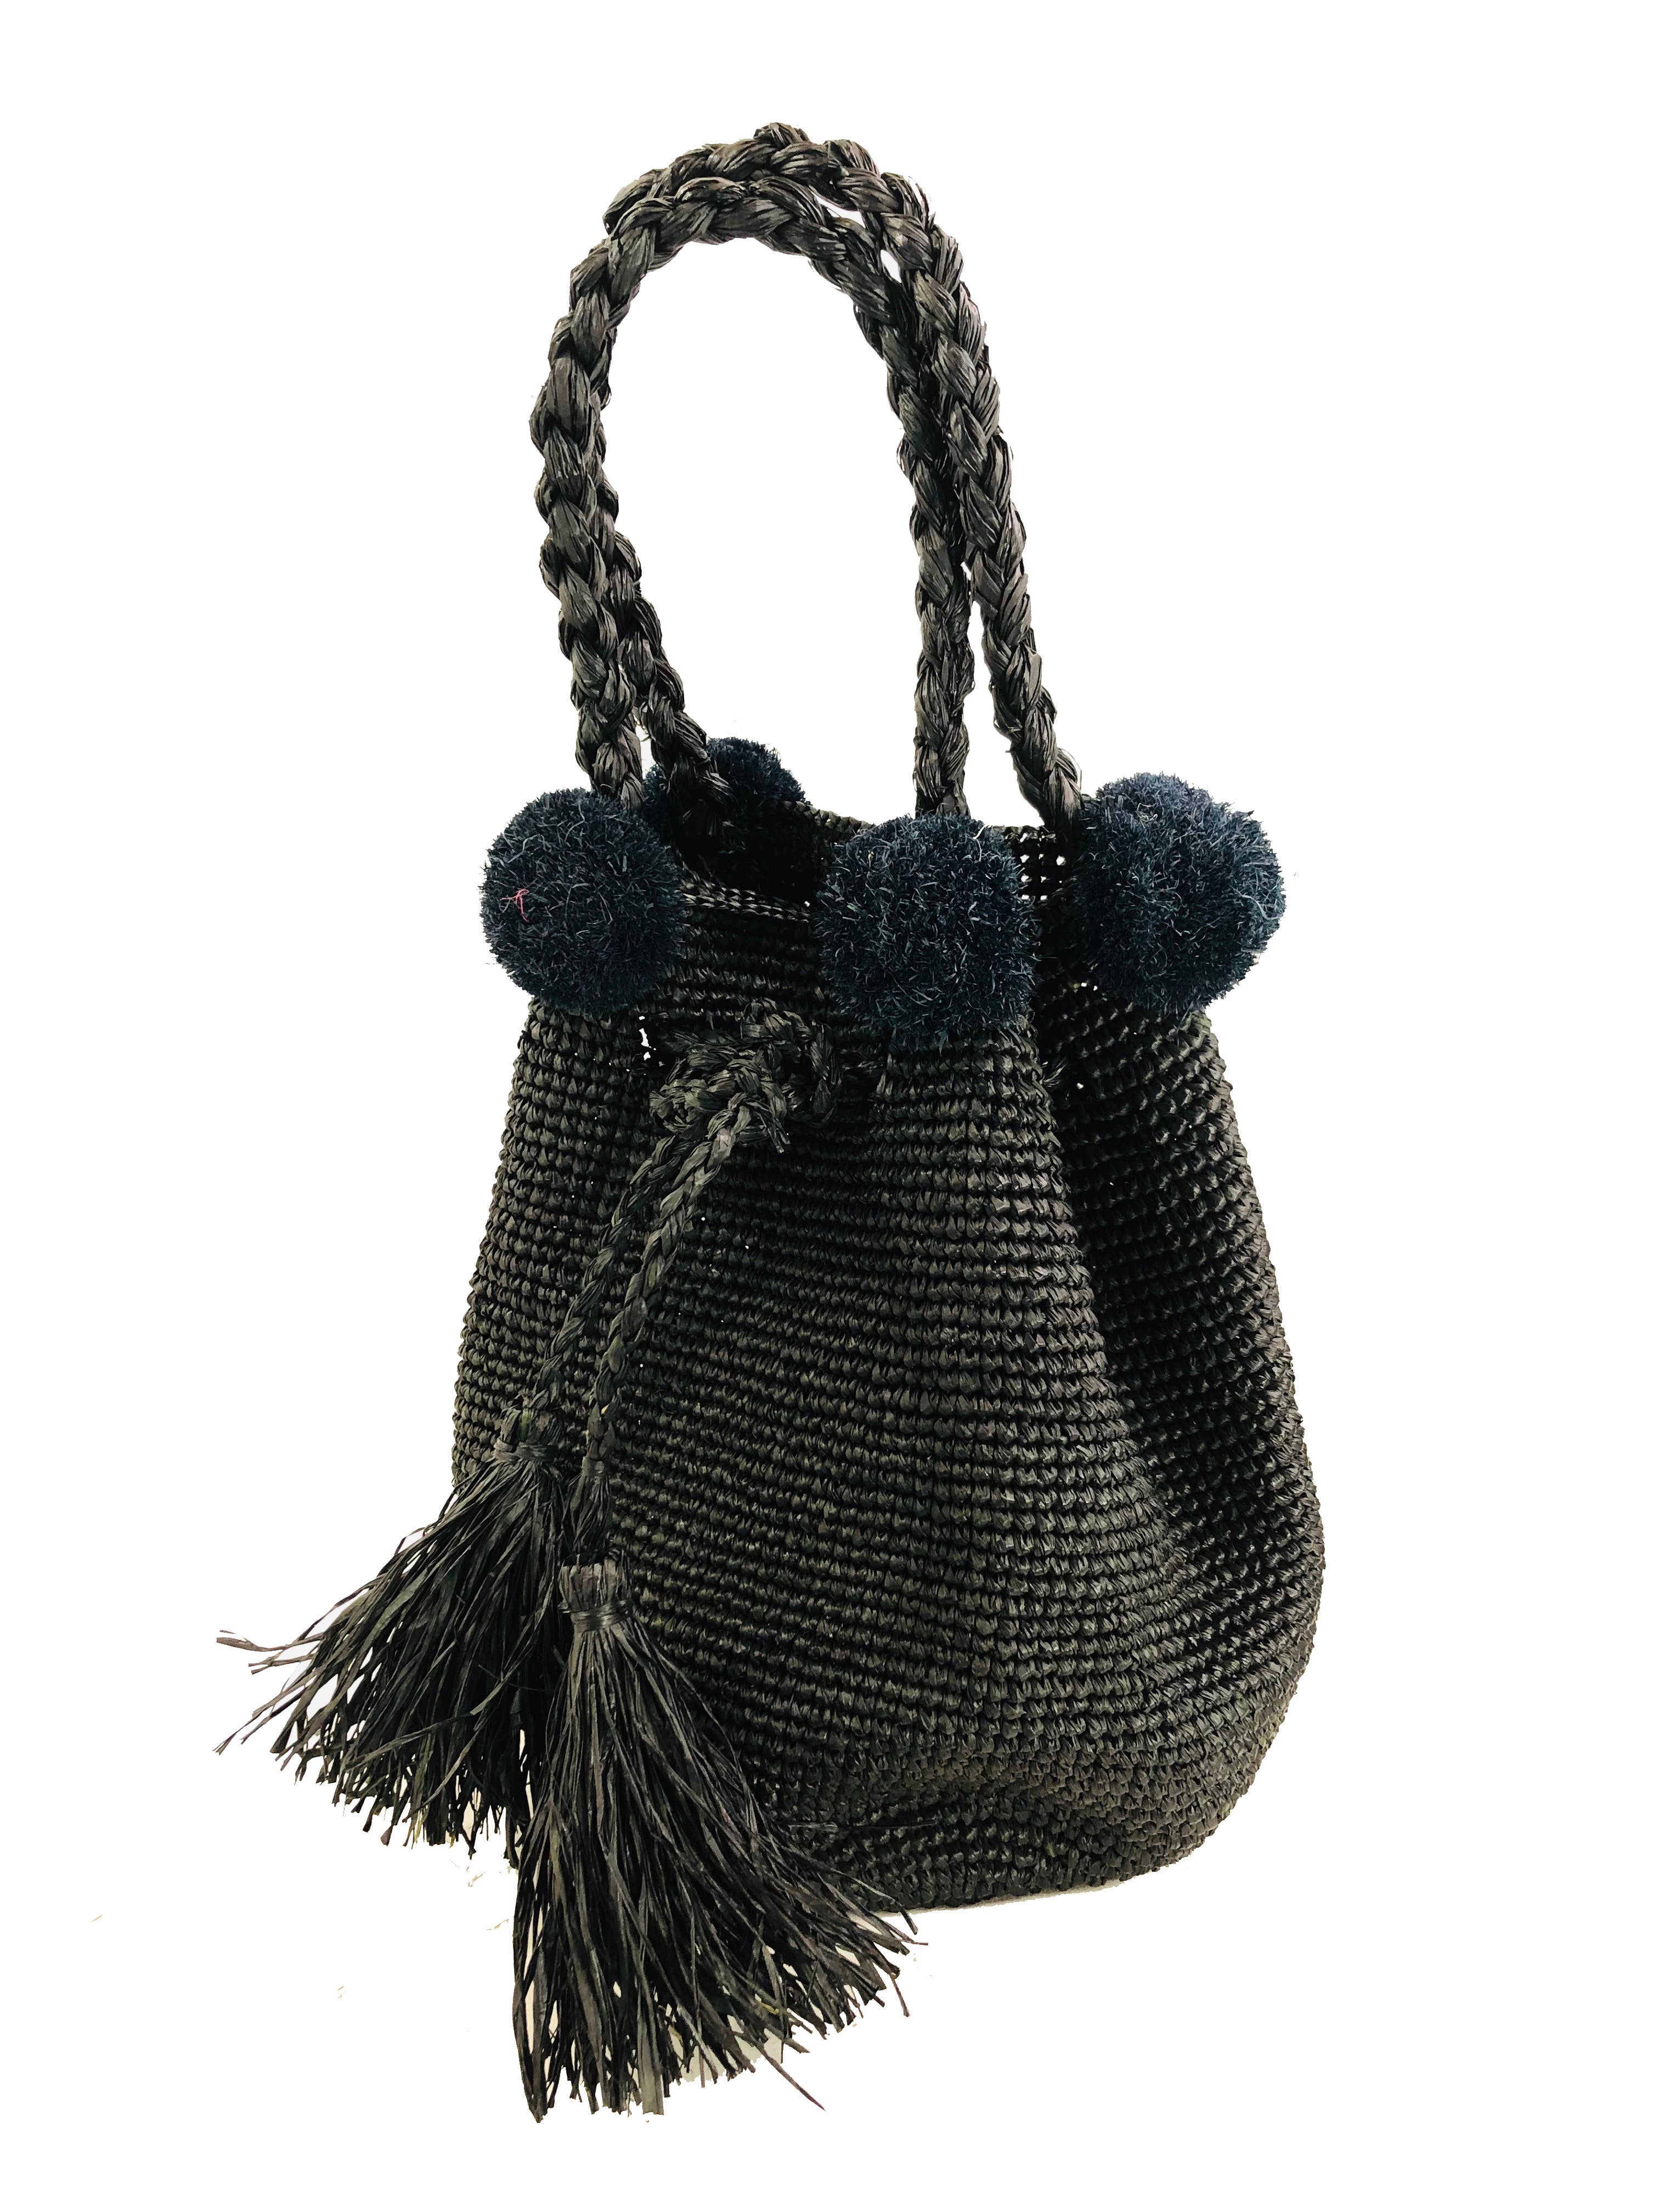 Hobo Crochet Straw Handbag with Pompom Accents-Black